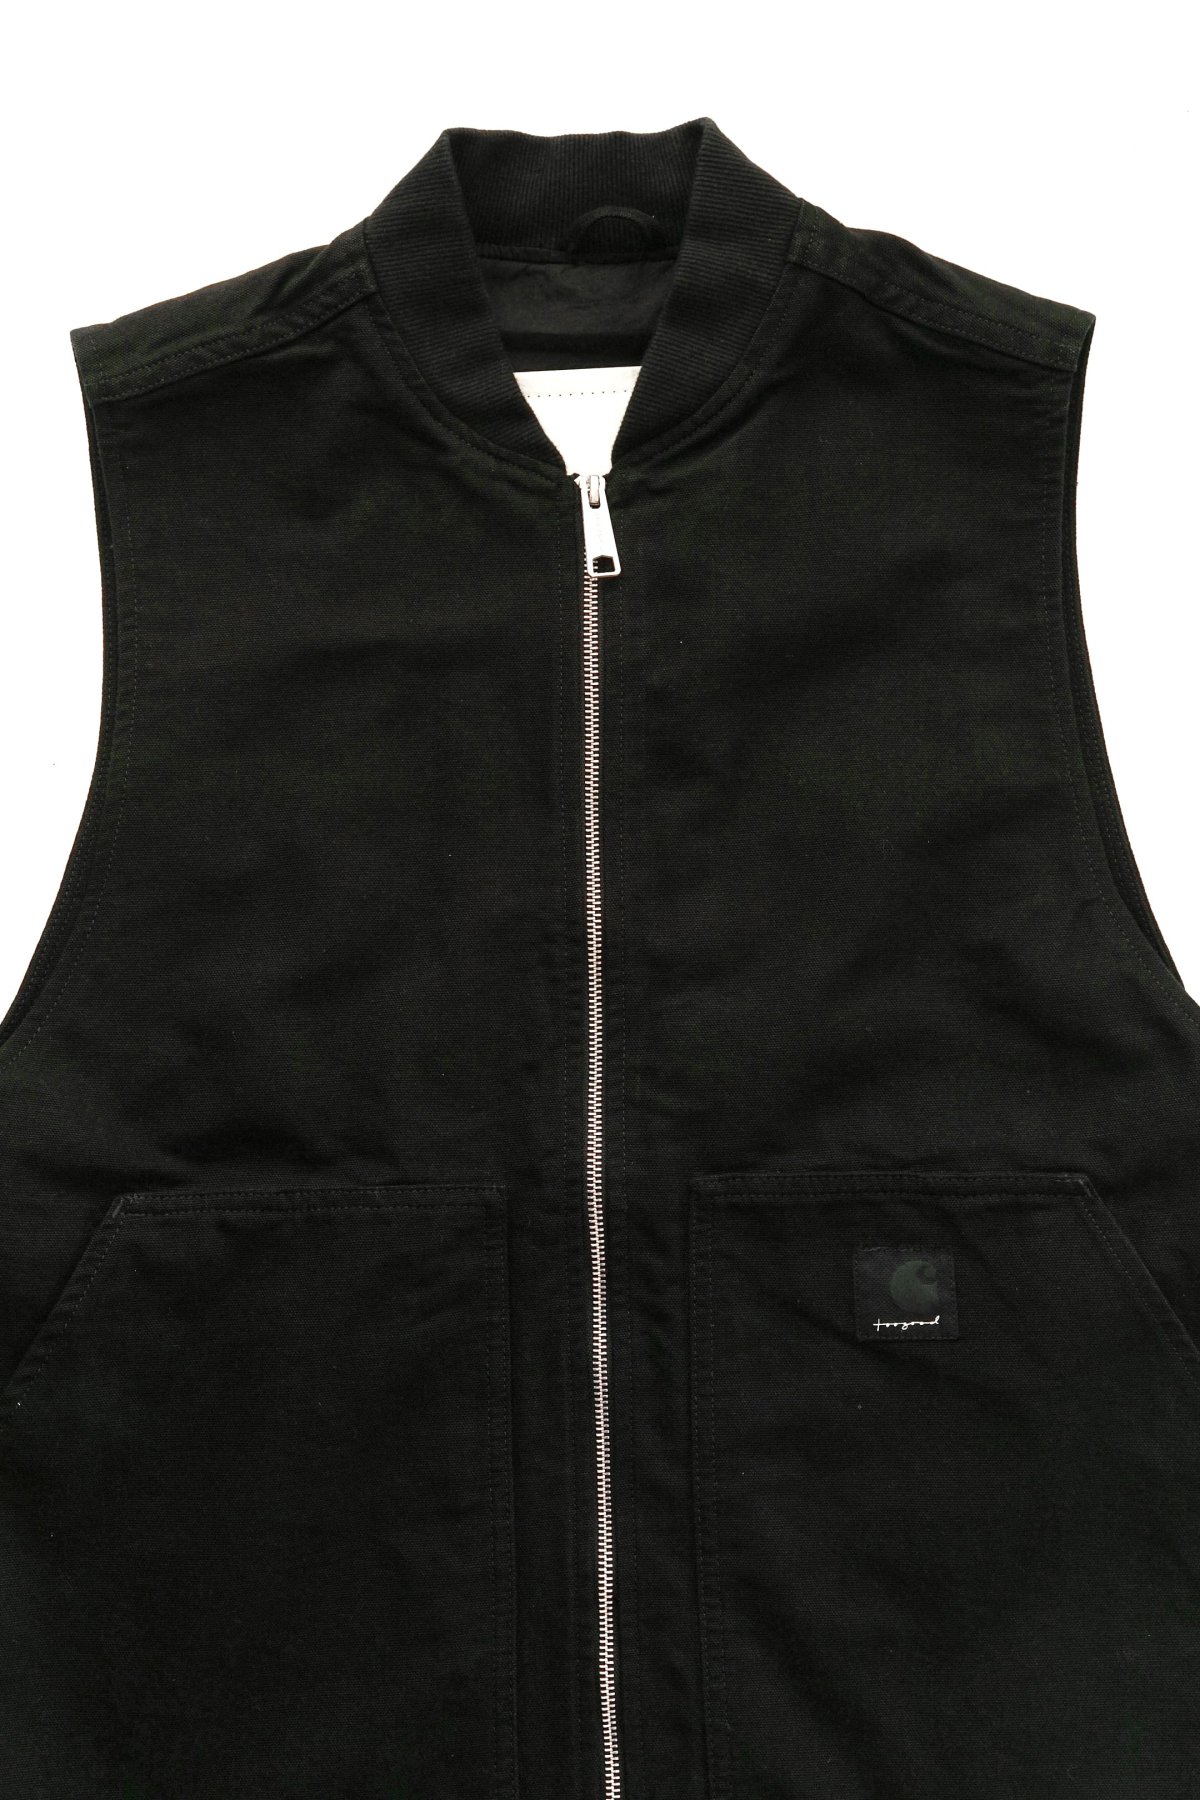 Carhartt TOOGOOD vest ベスト sizeXS black